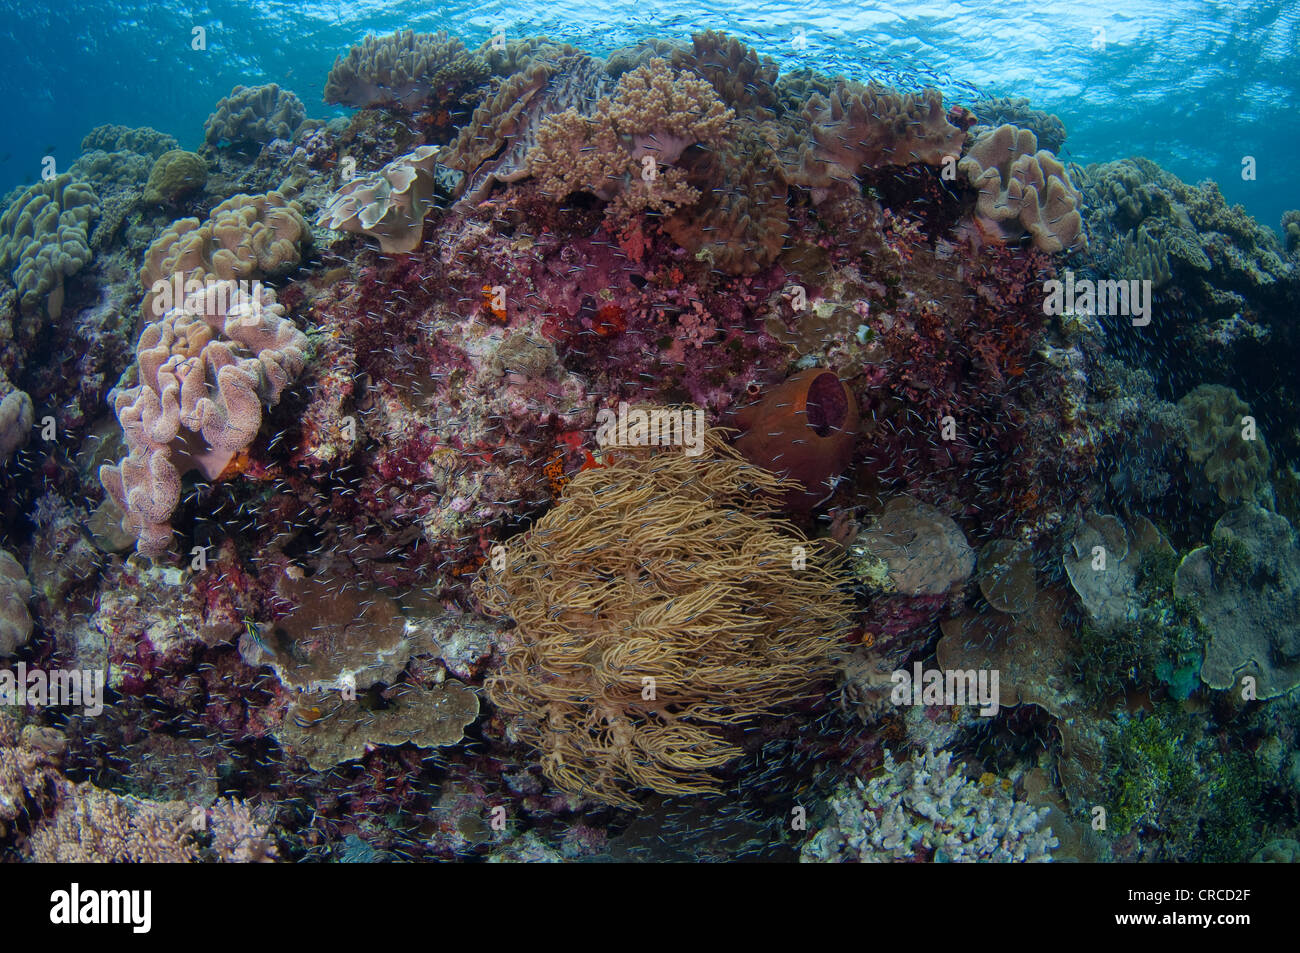 Mixed invertebrates growing on reef, Wakatobi, Sulawesi Tenggara, Indonesia. Stock Photo